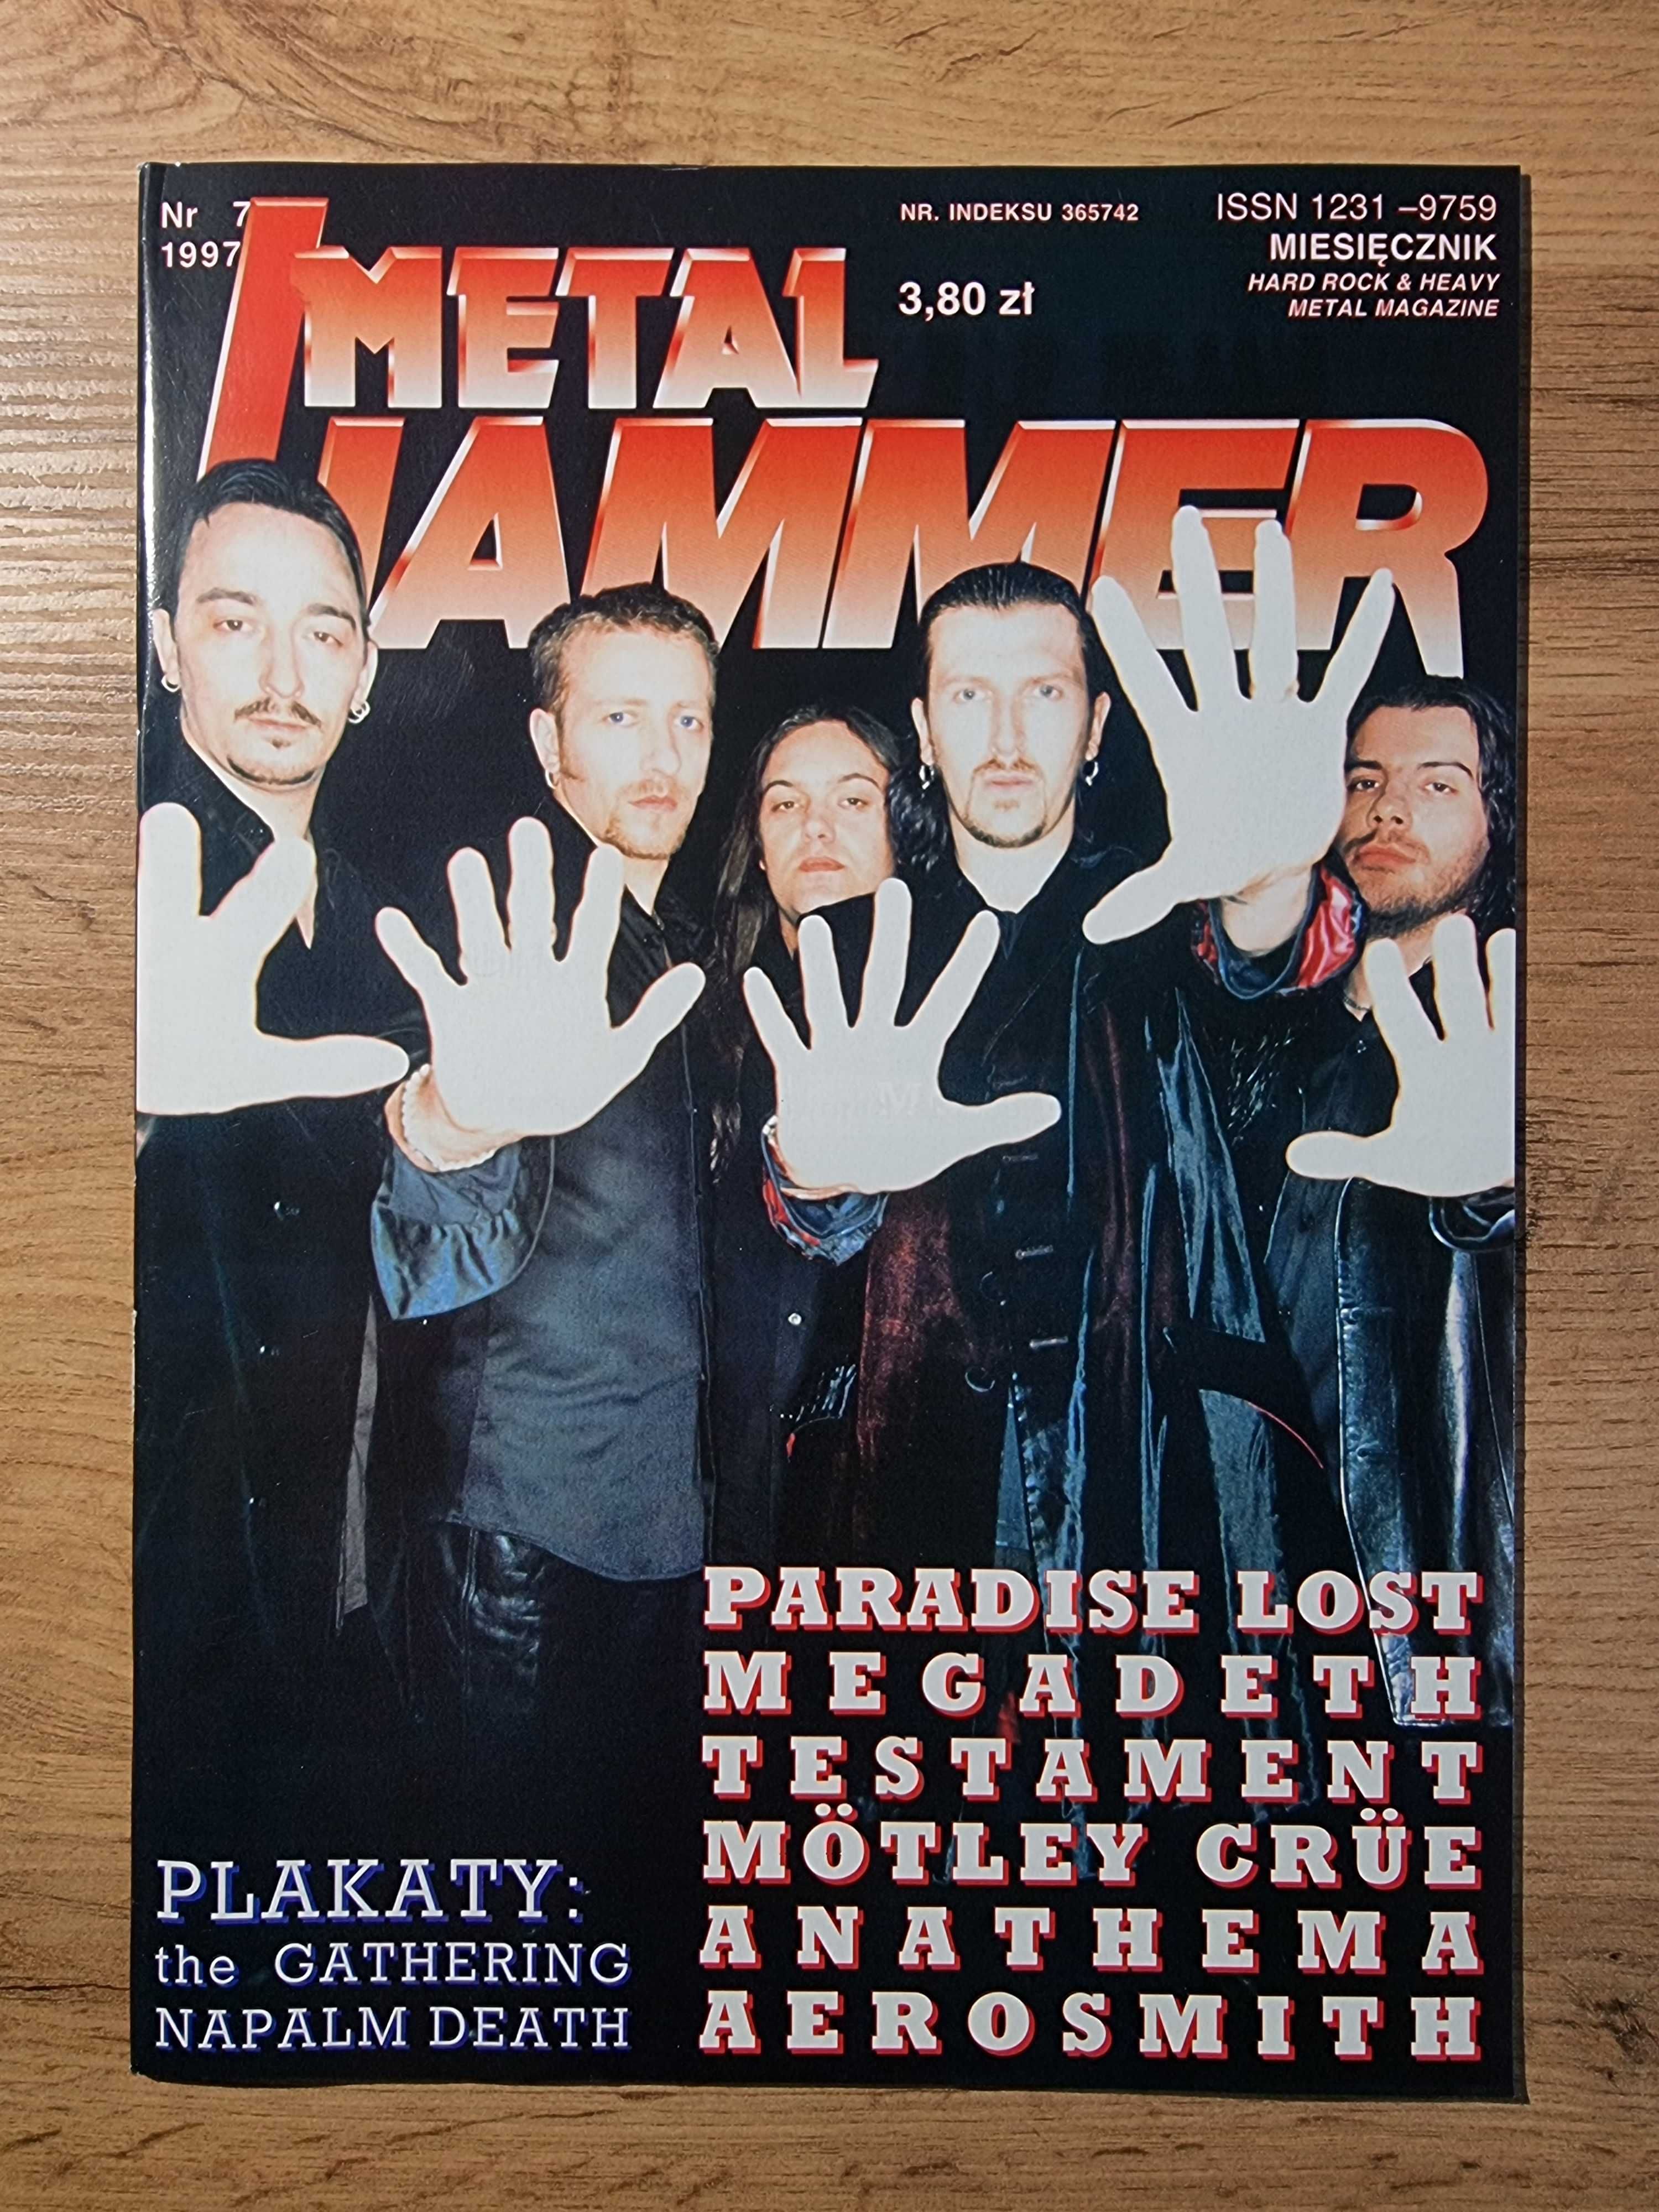 Metal Hammer 1997 - Plakaty: the Gathering i Napalm Death